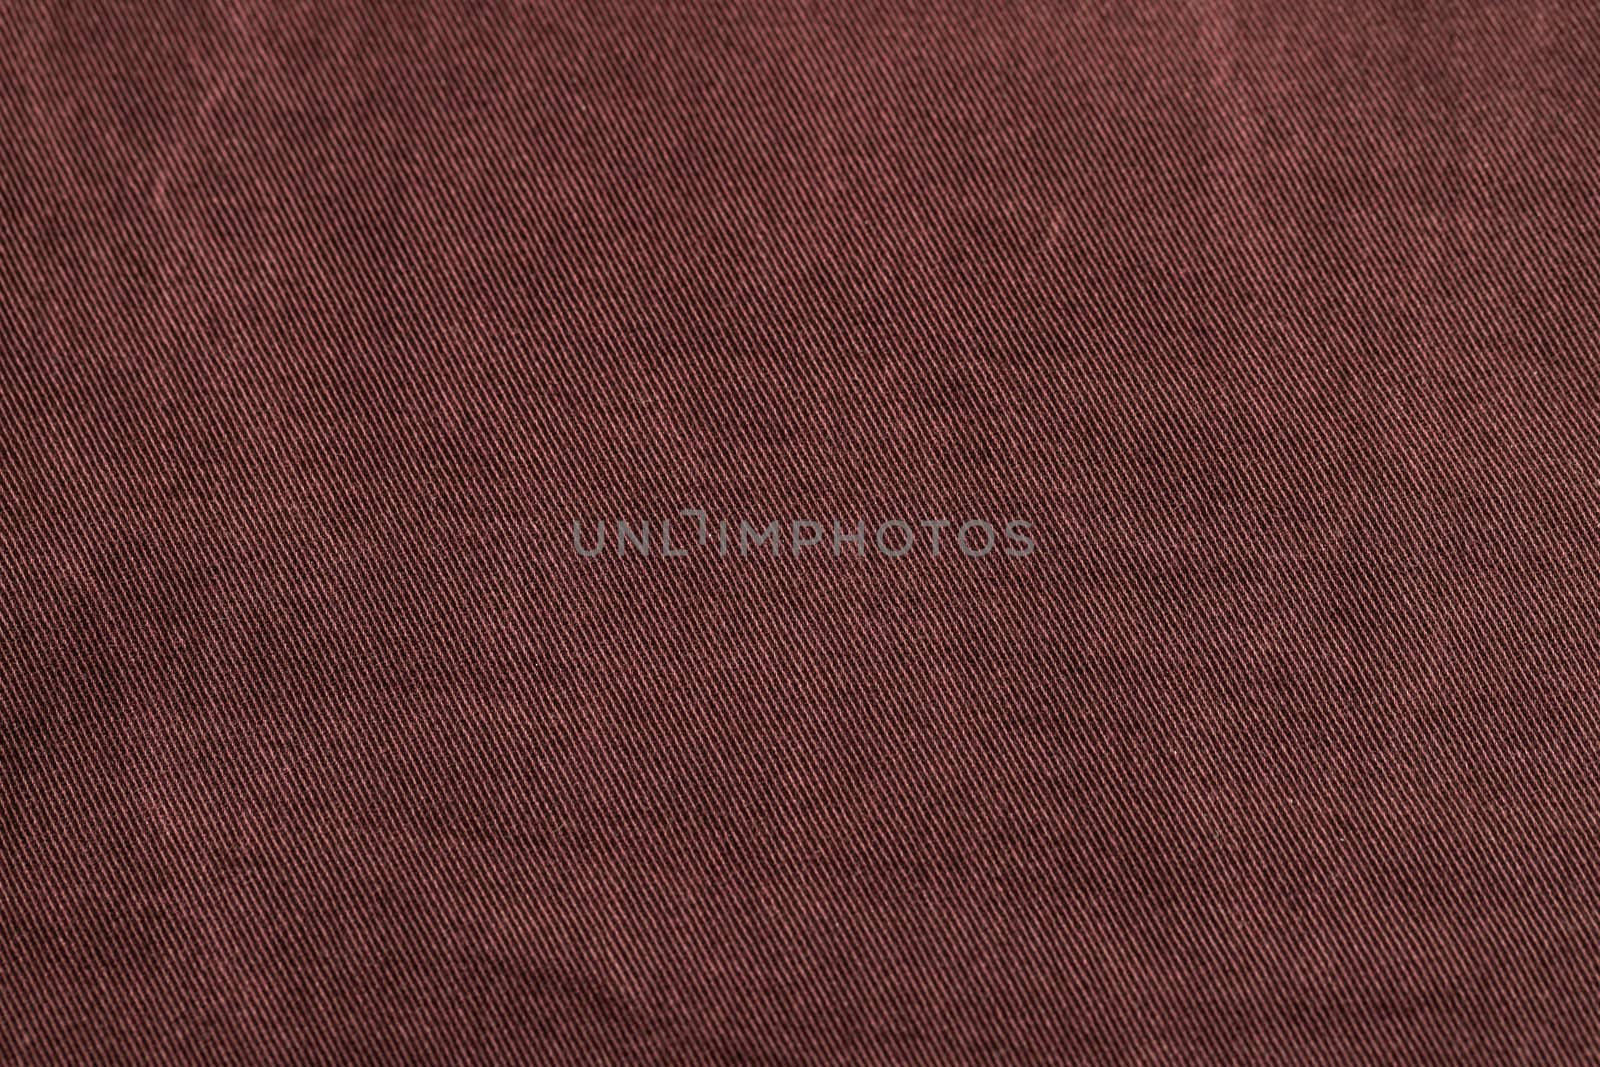 Dark cherry Denim Texture. Denim background of jeans of unusual color by bonilook